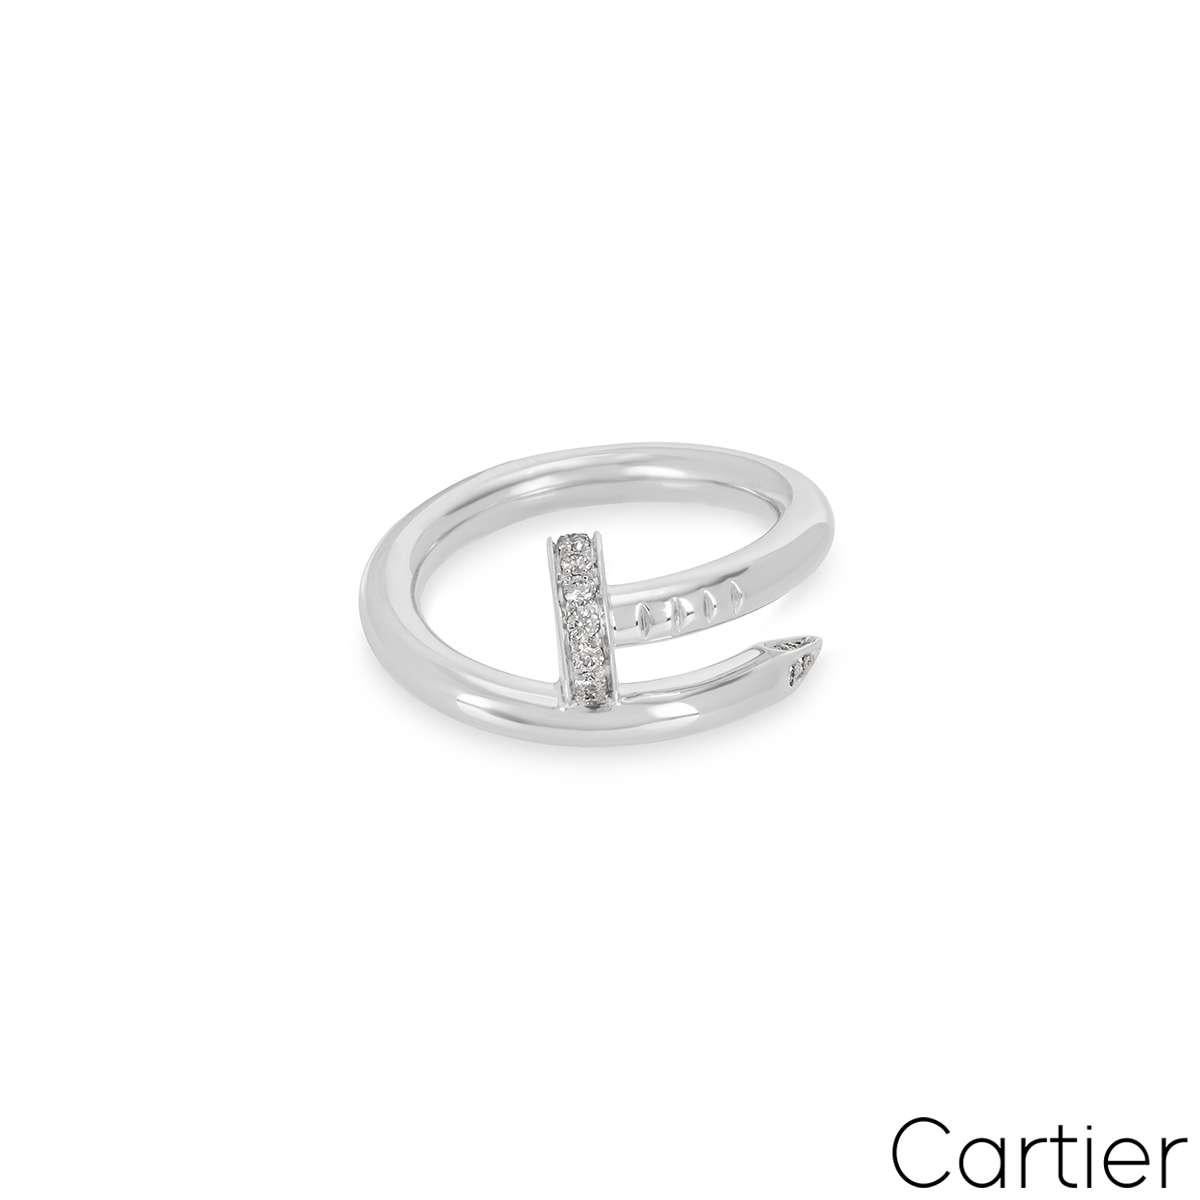 Round Cut Cartier White Gold Diamond Juste un Clou Ring Size 51 B4092700 For Sale